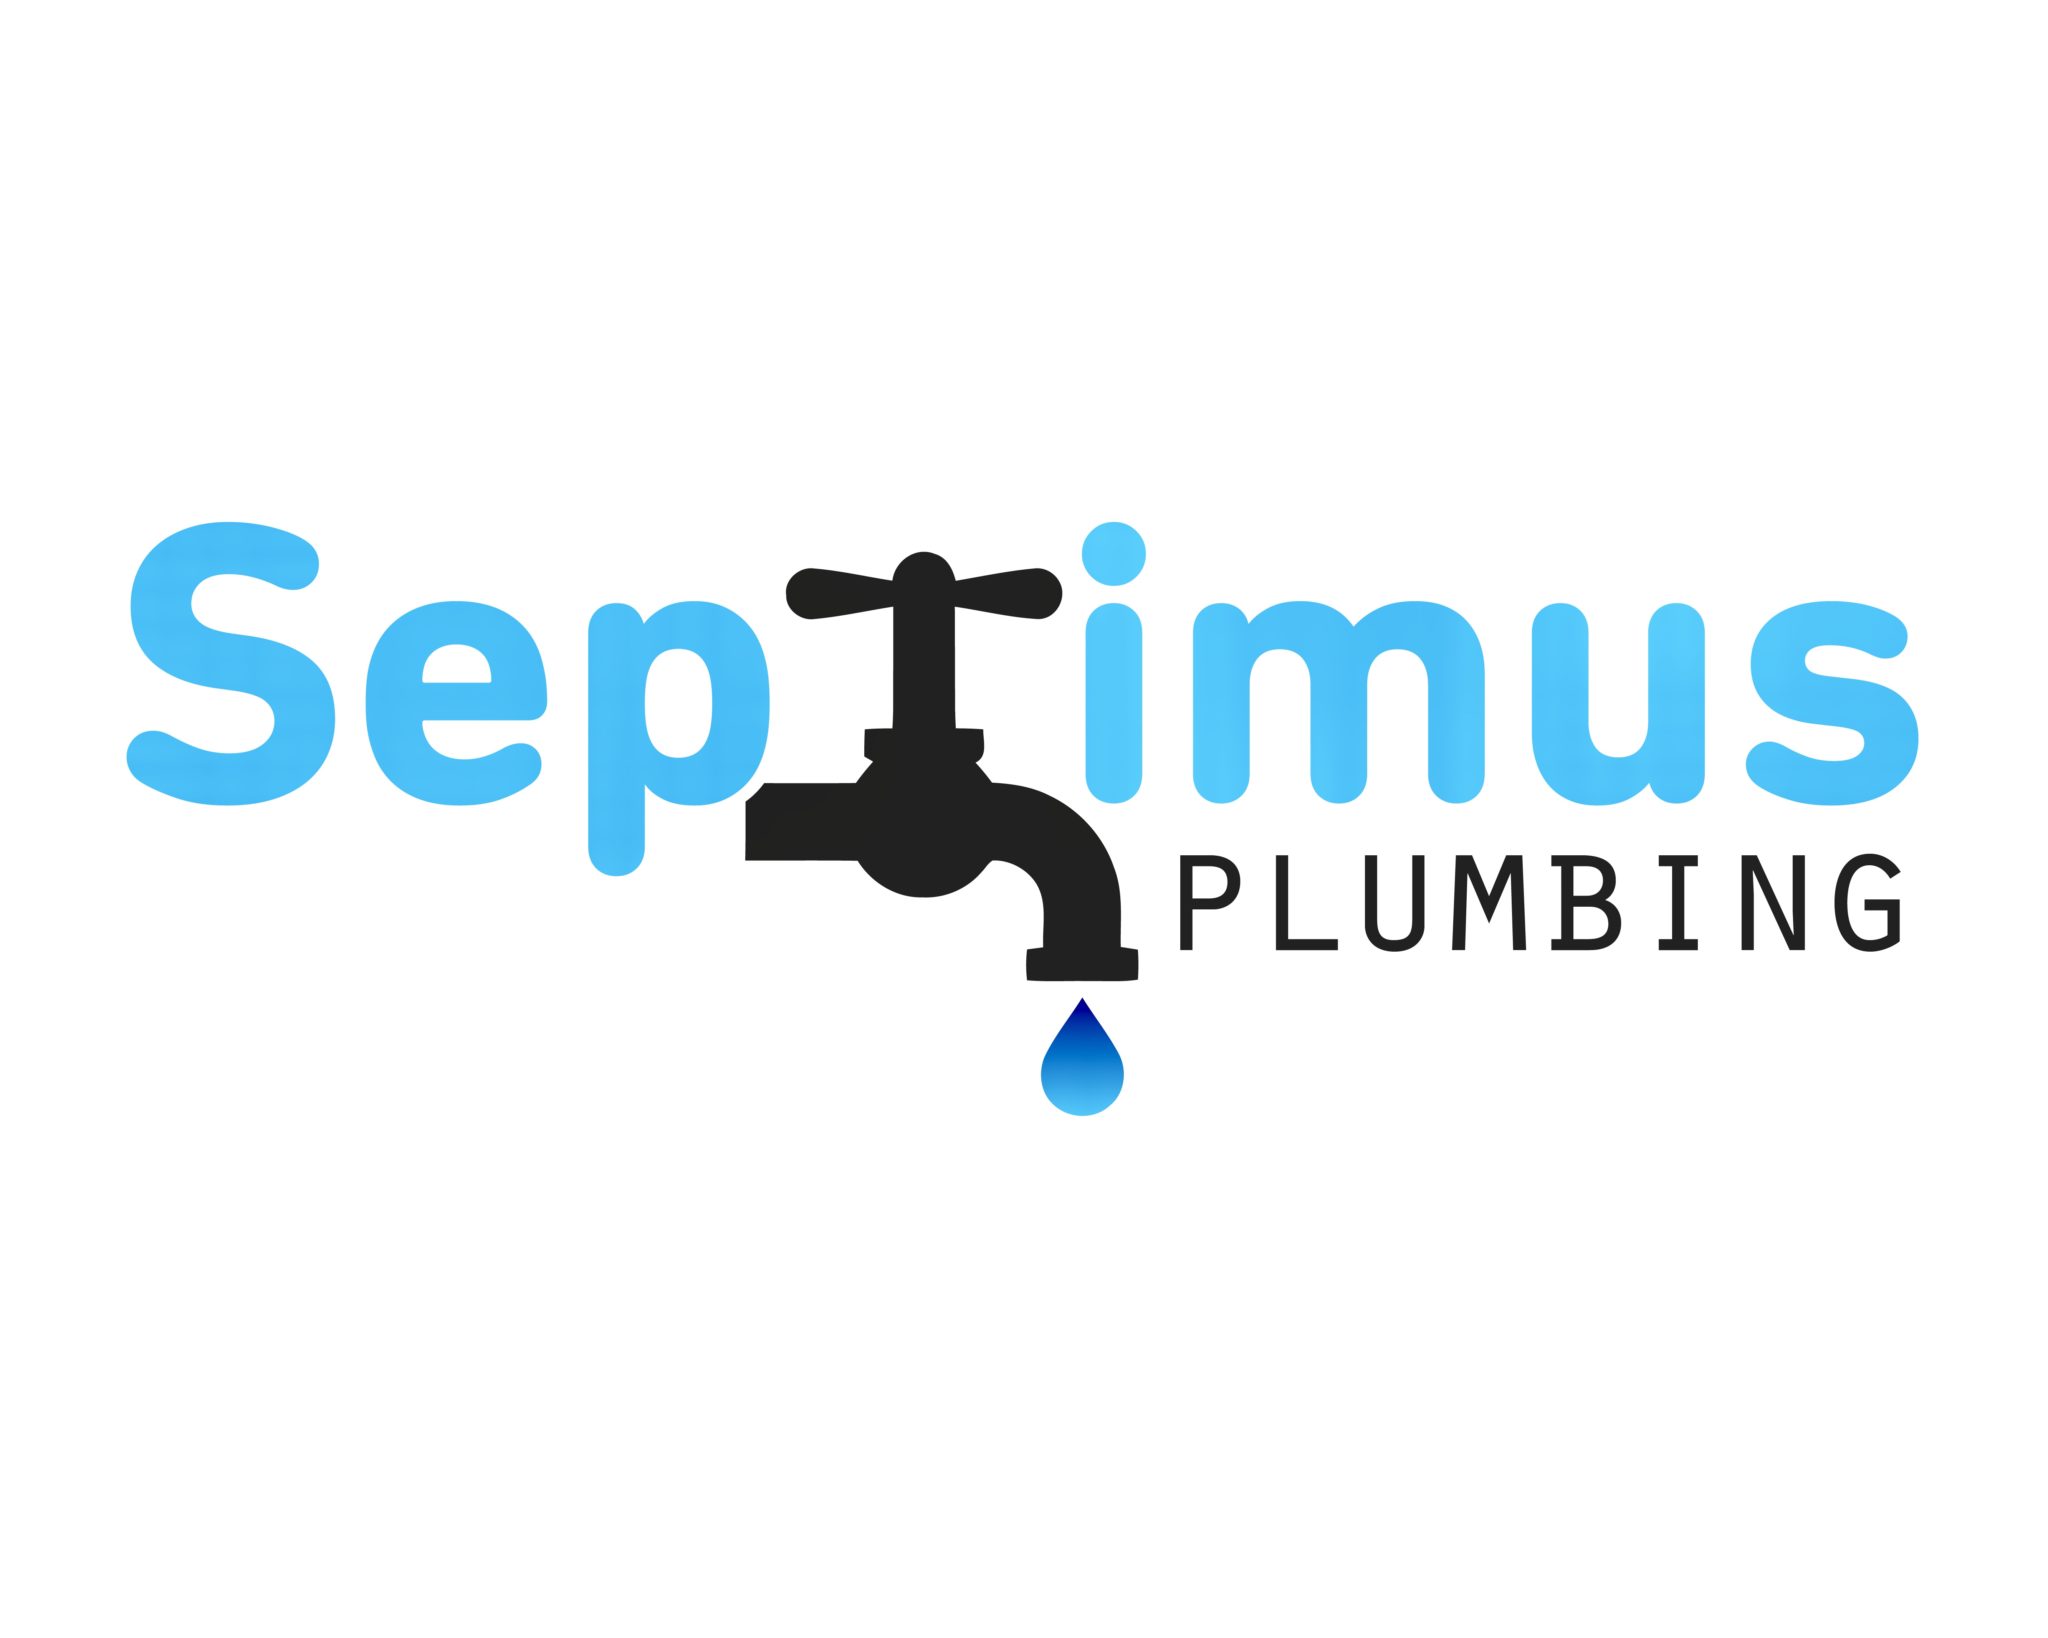 Septimus Plumbing